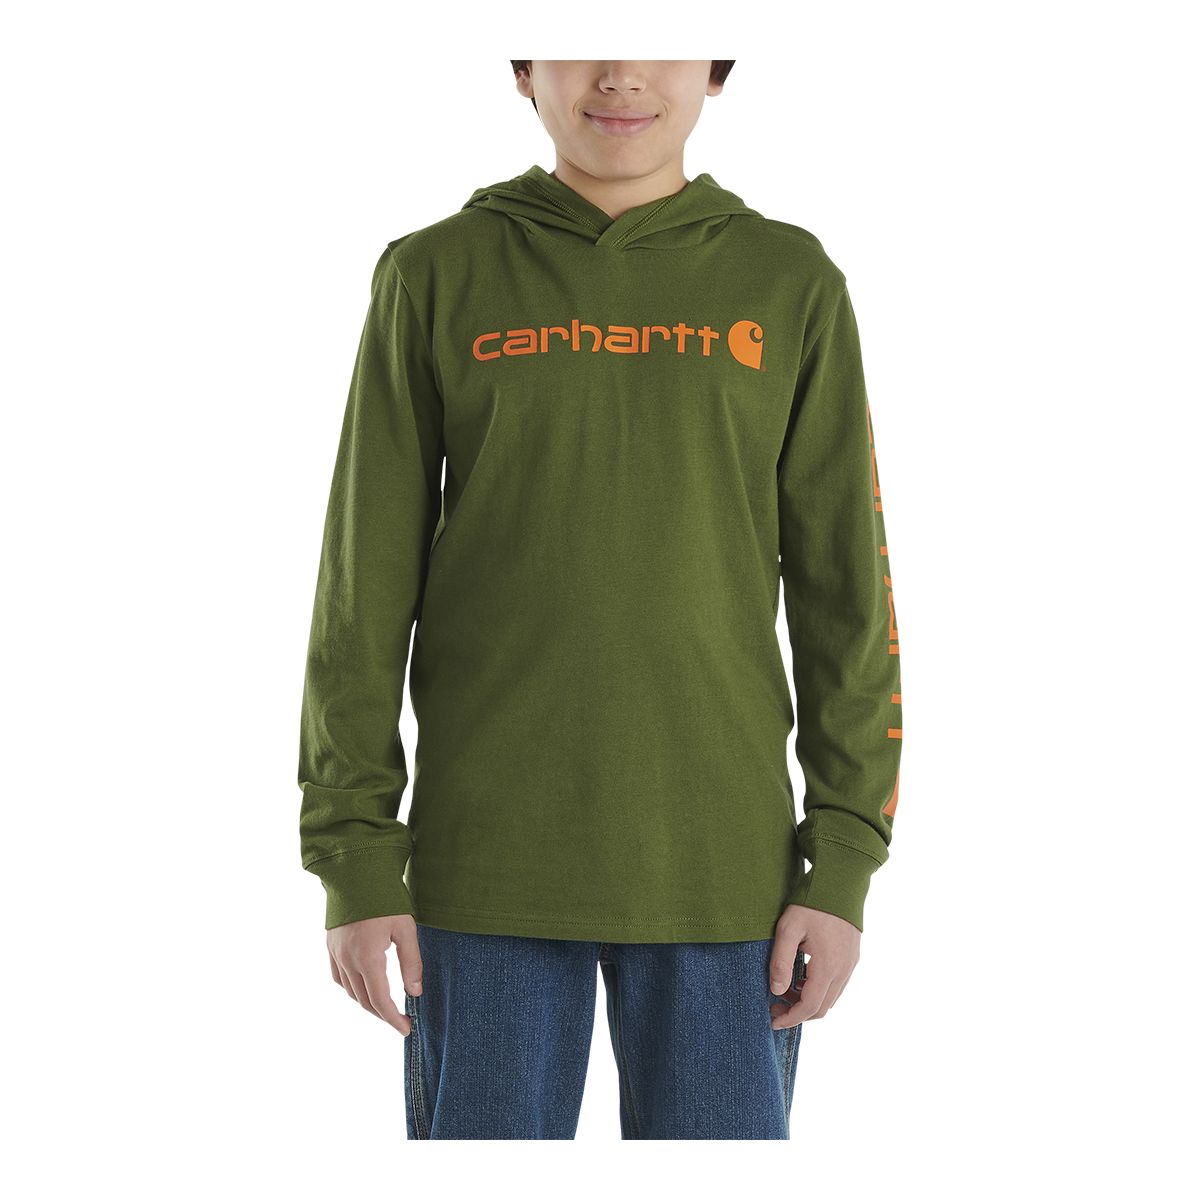 Image of Carhartt Kids' Hooded Long Sleeve T Shirt